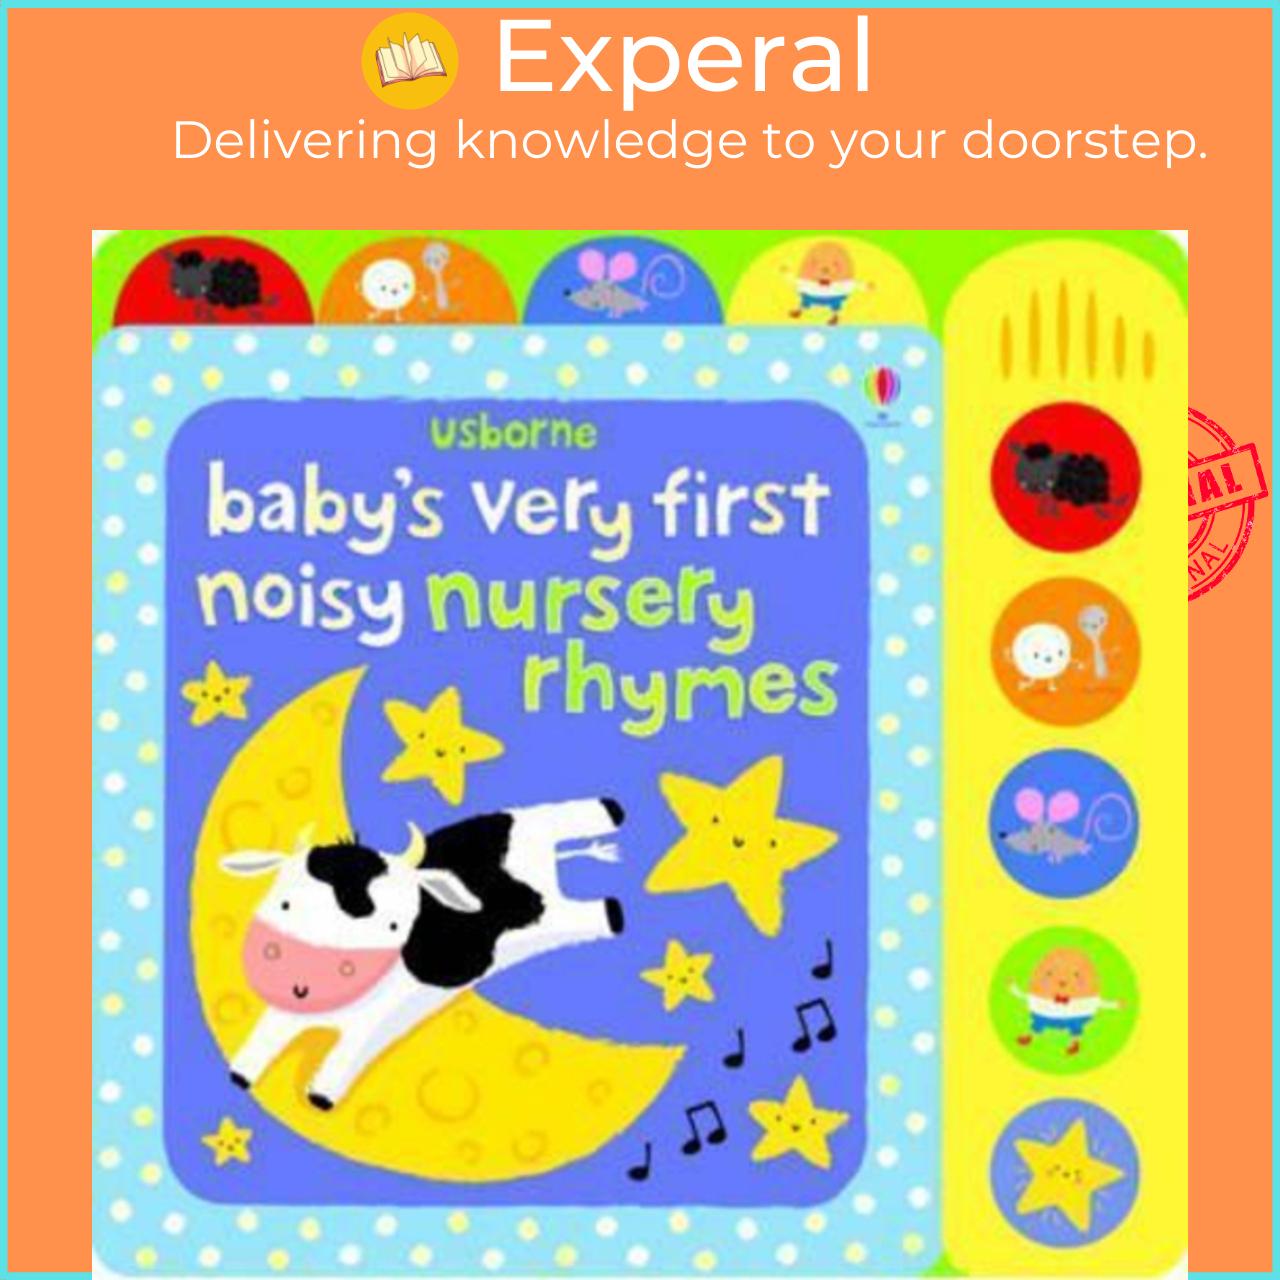 Sách - Baby's Very First Noisy Nursery Rhymes by Fiona Watt (UK edition, paperback)